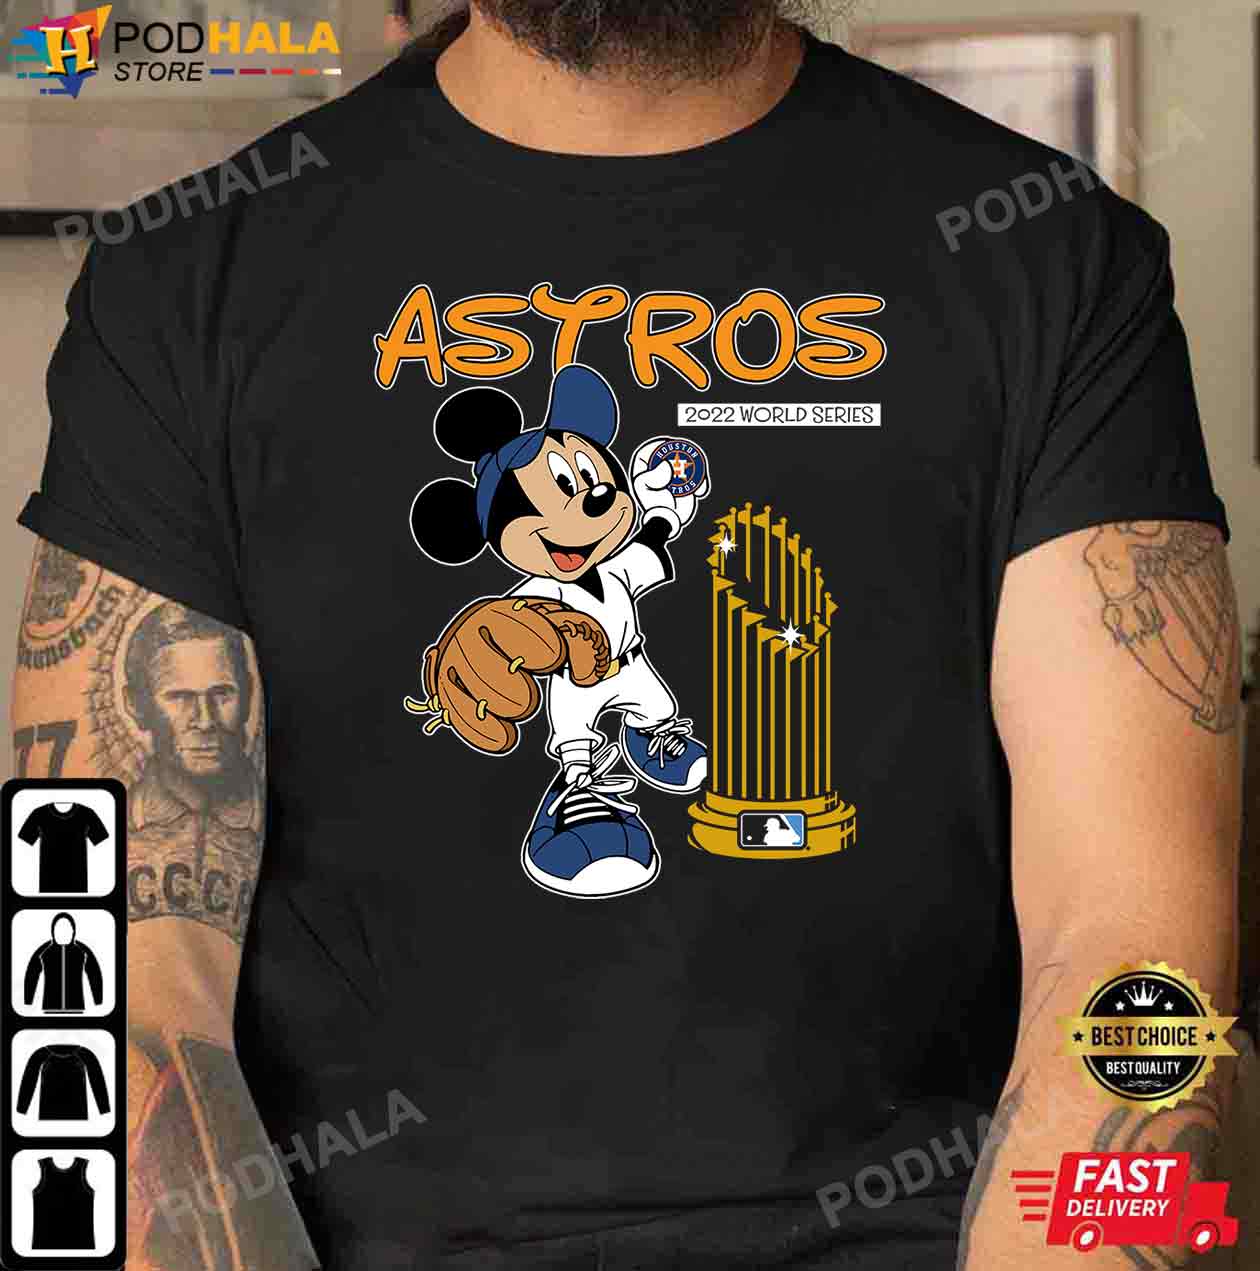 Astronaut Space Houston Astros T-Shirt MLB 2022 World Series